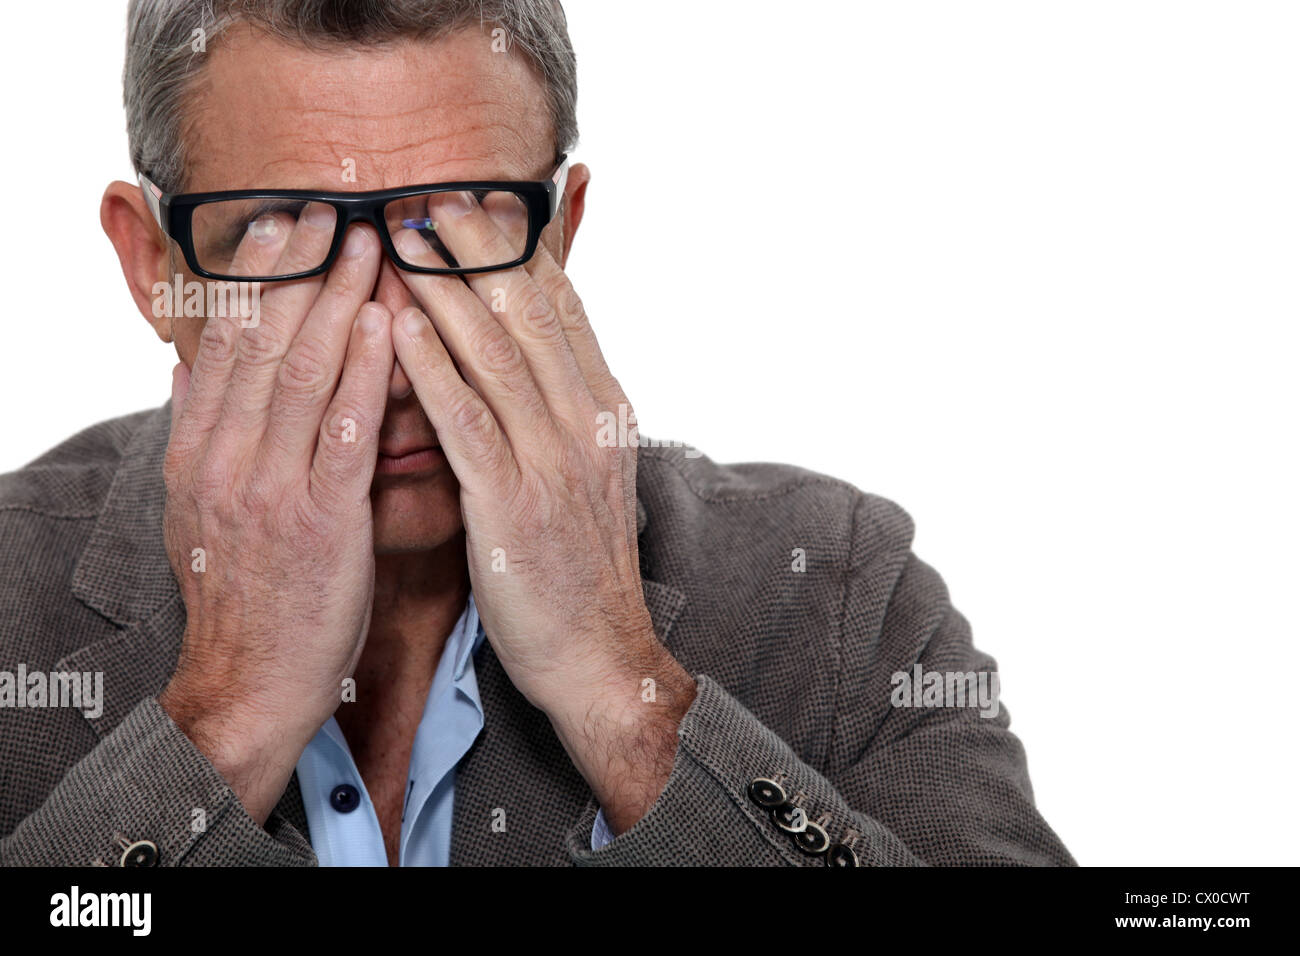 Man rubbing his eyes Stock Photo